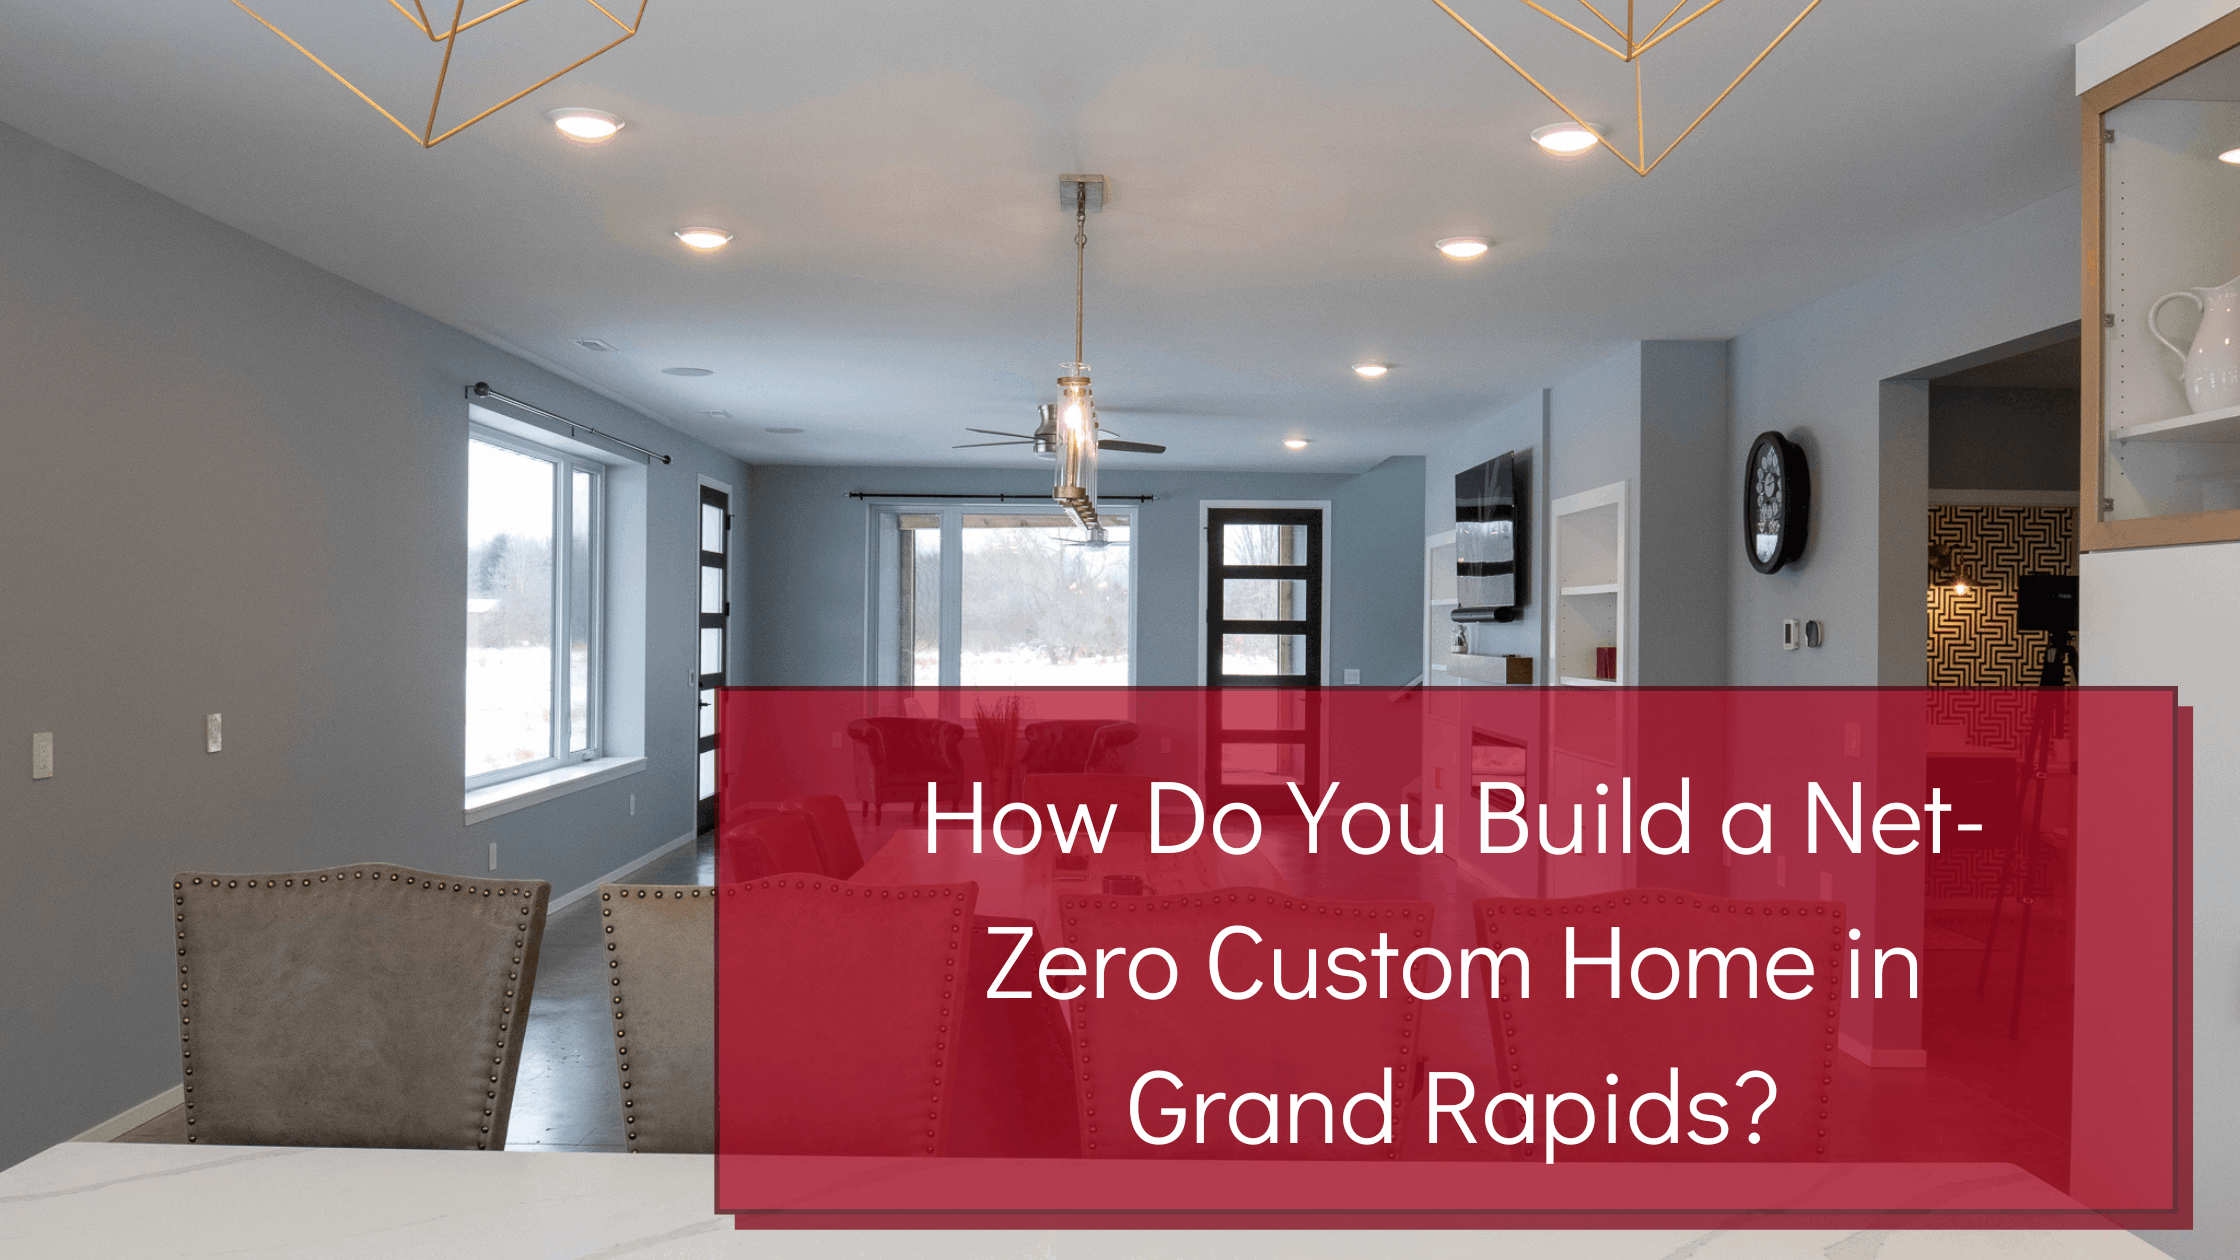 How To Build a Net-Zero Custom Home in Grand Rapids